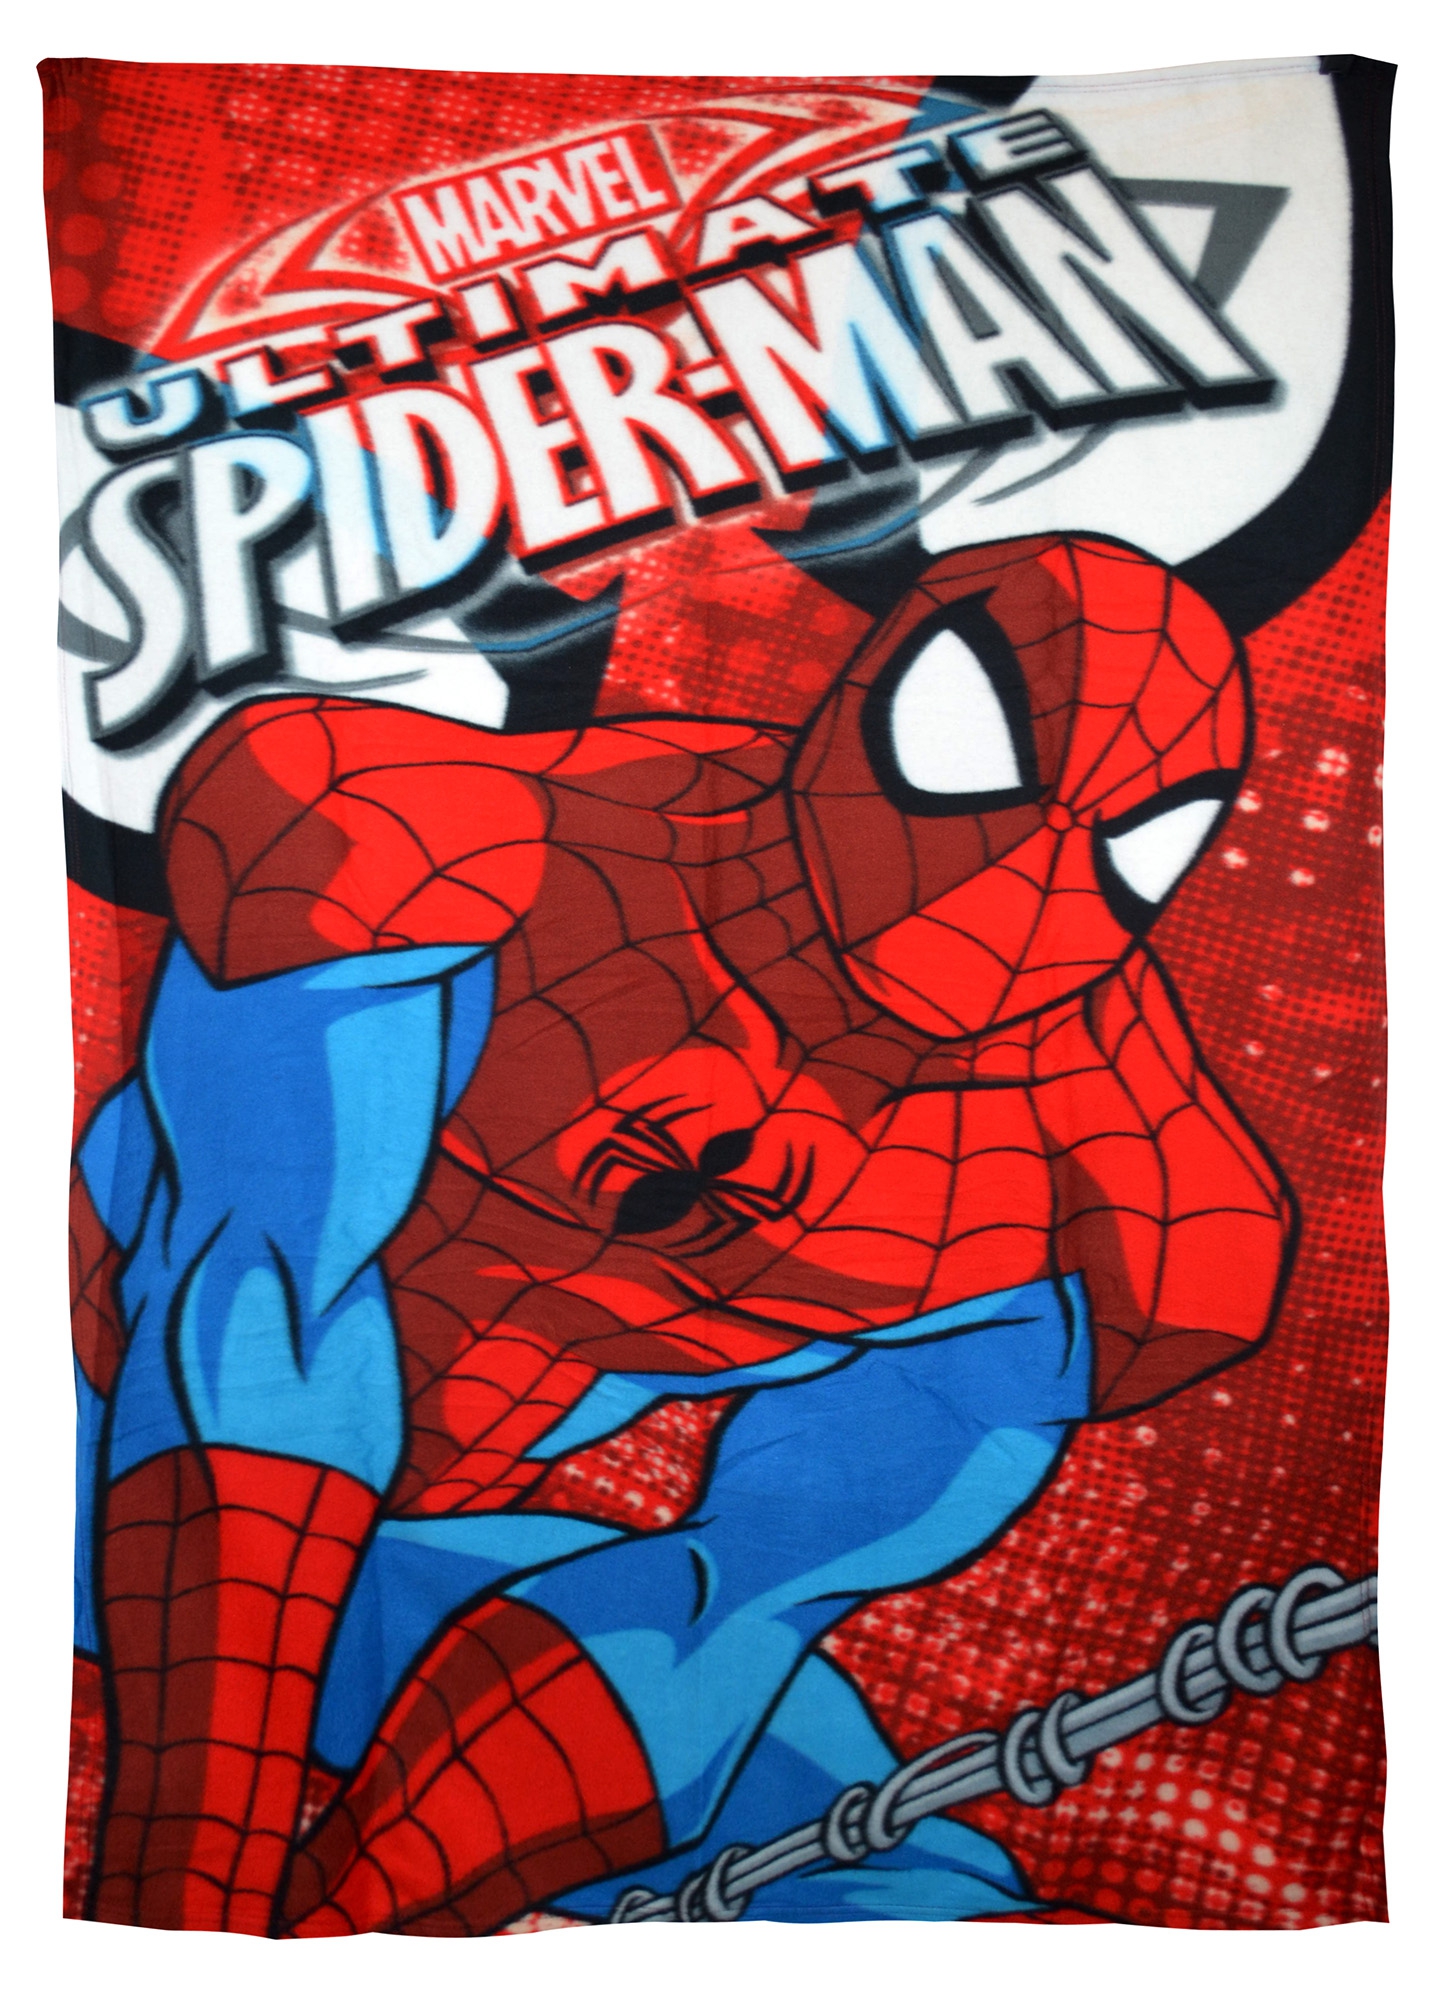 Spiderman 'Swing' Panel Fleece Blanket Throw